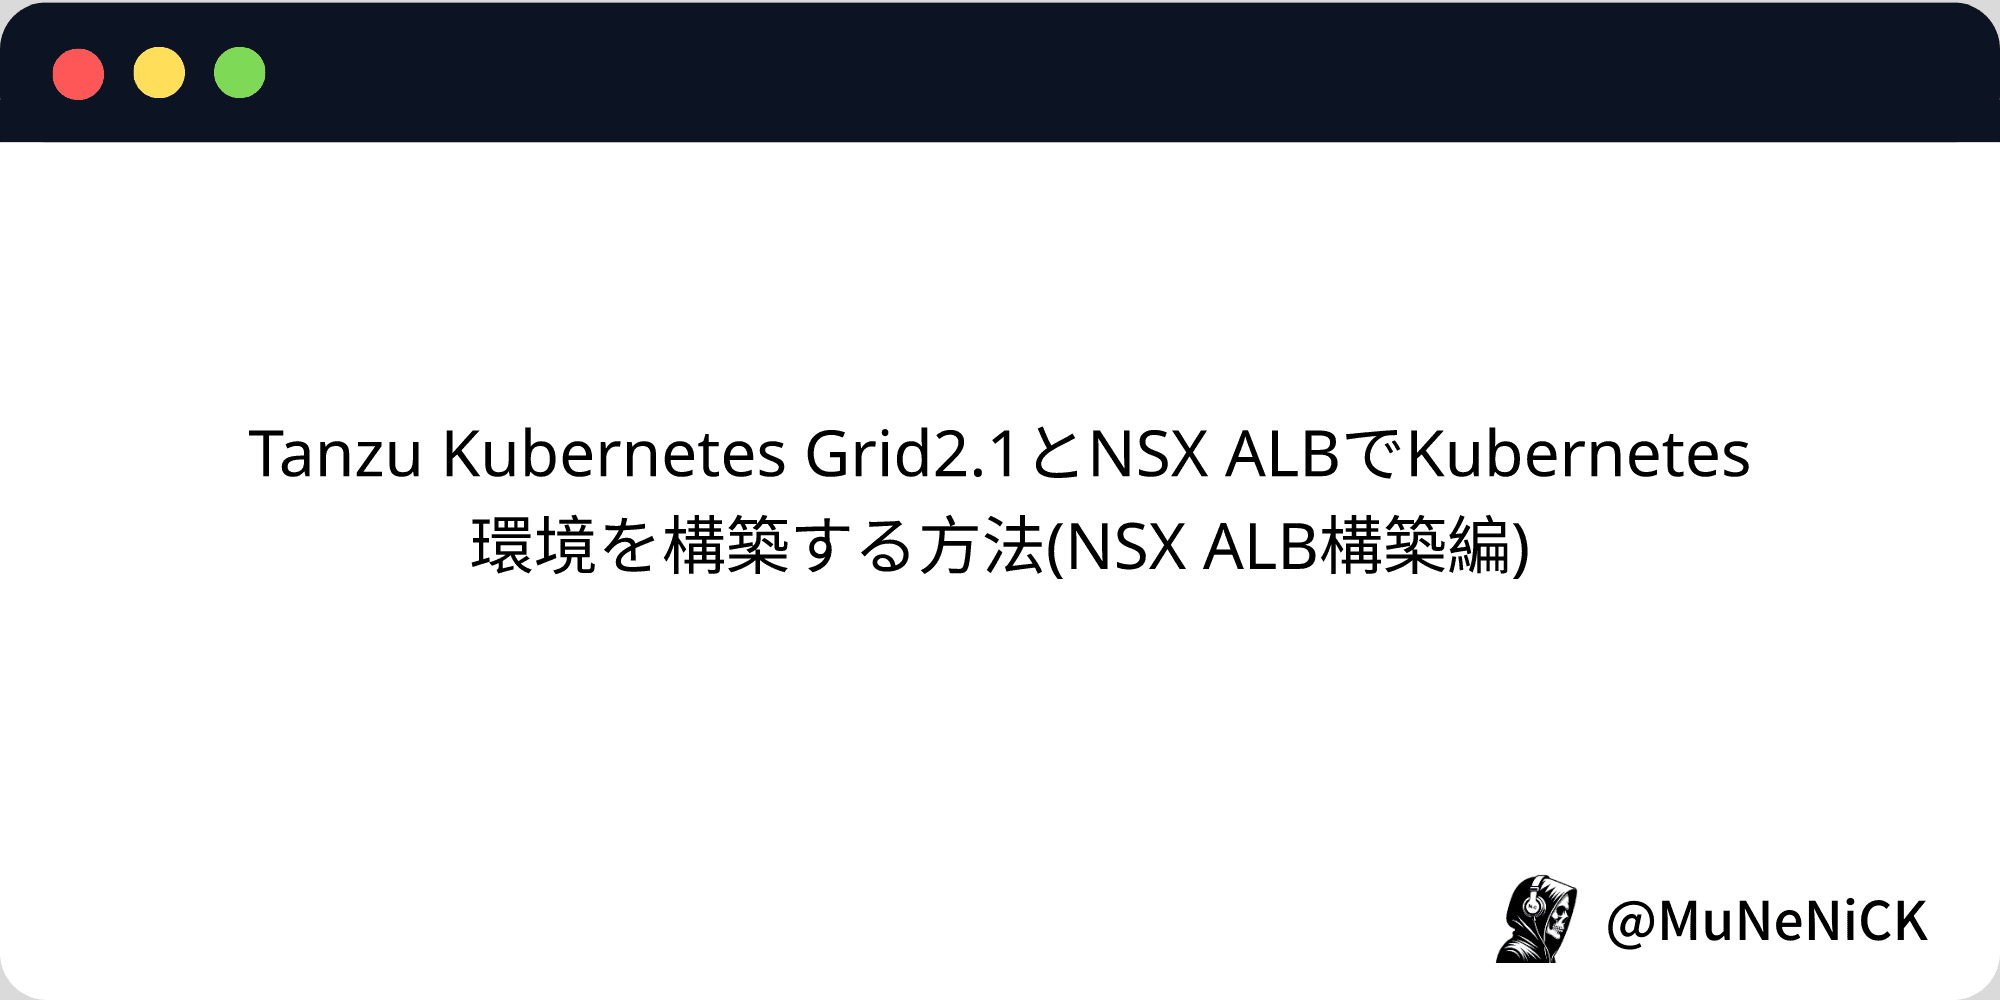 Cover Image for Tanzu Kubernetes Grid2.1とNSX ALBでKubernetes環境を構築する方法(NSX ALB構築編)